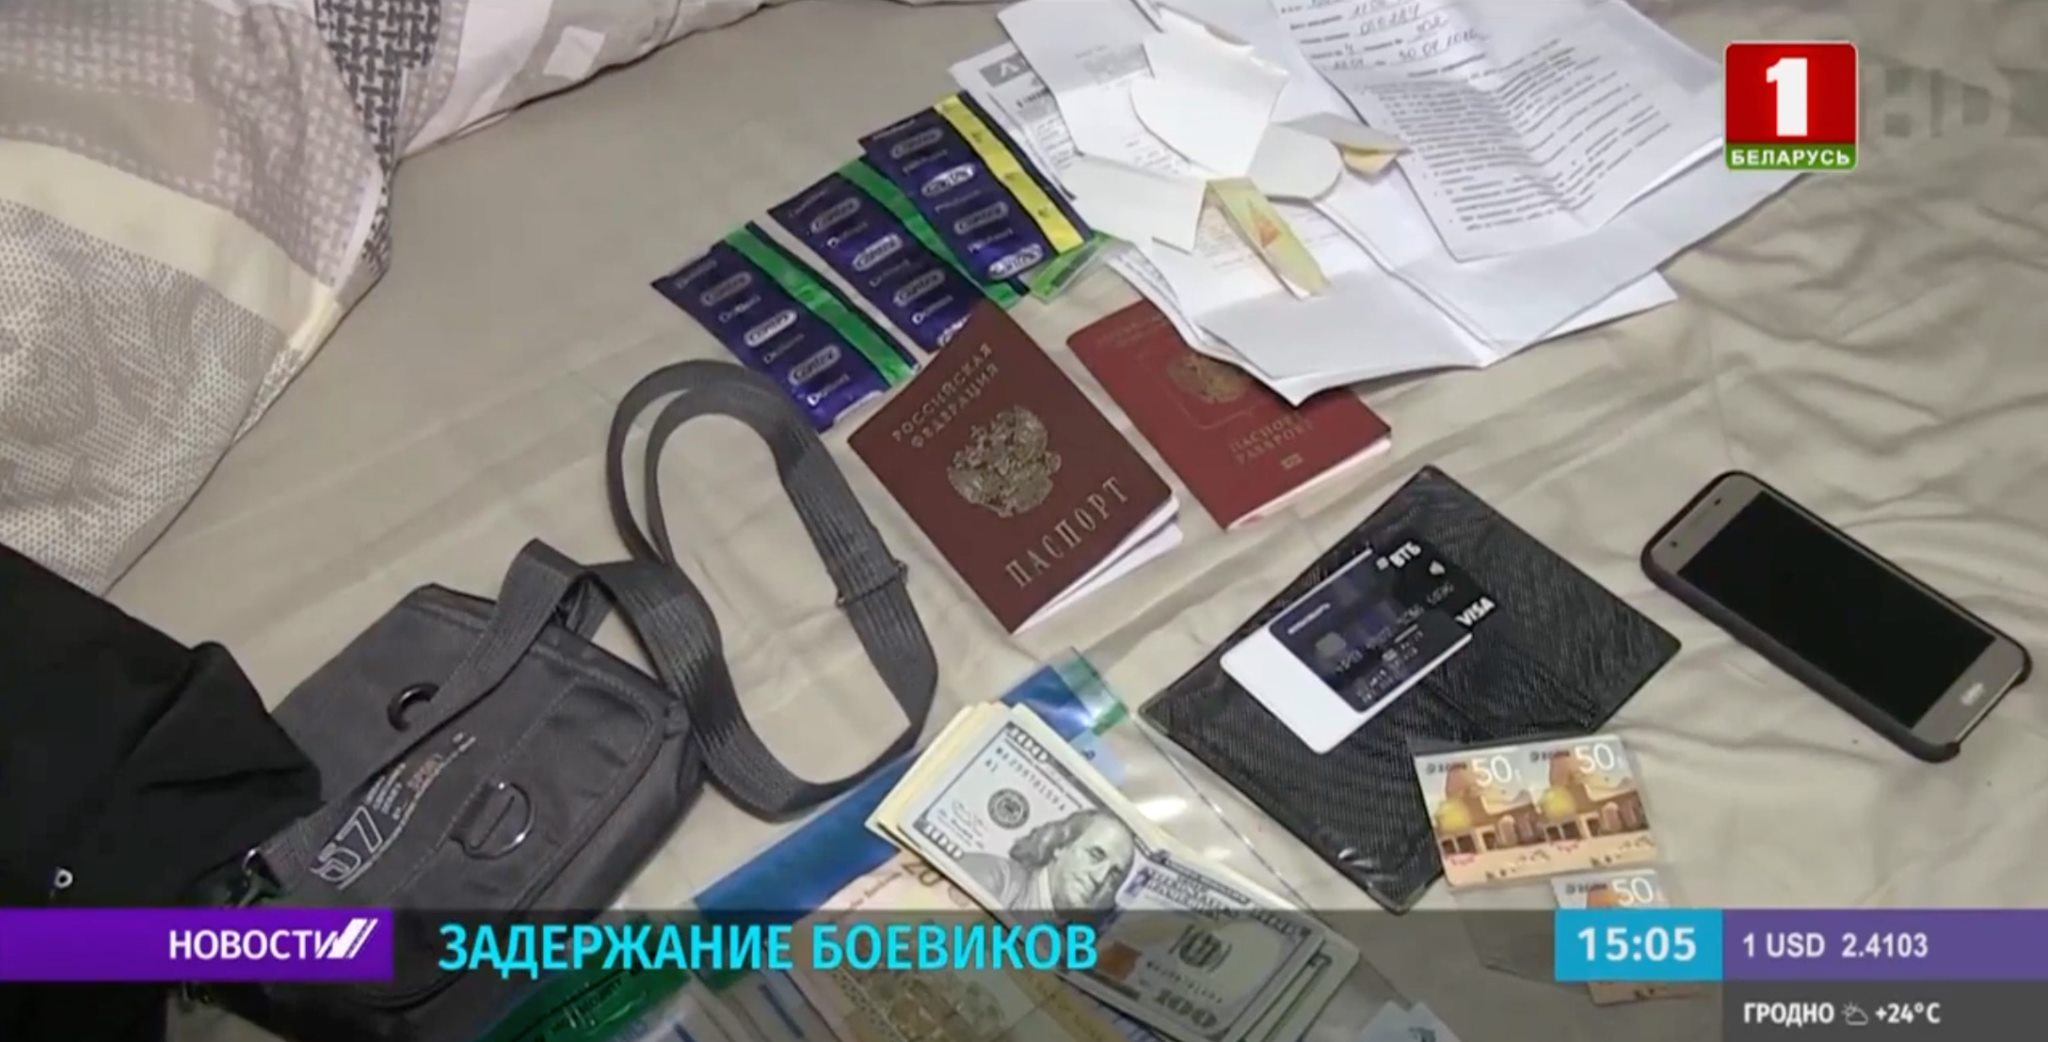 Russian Wagner mercenaries arrested in Belarus: ‘little green men’ scenario, fighters in transit, or other? ~~